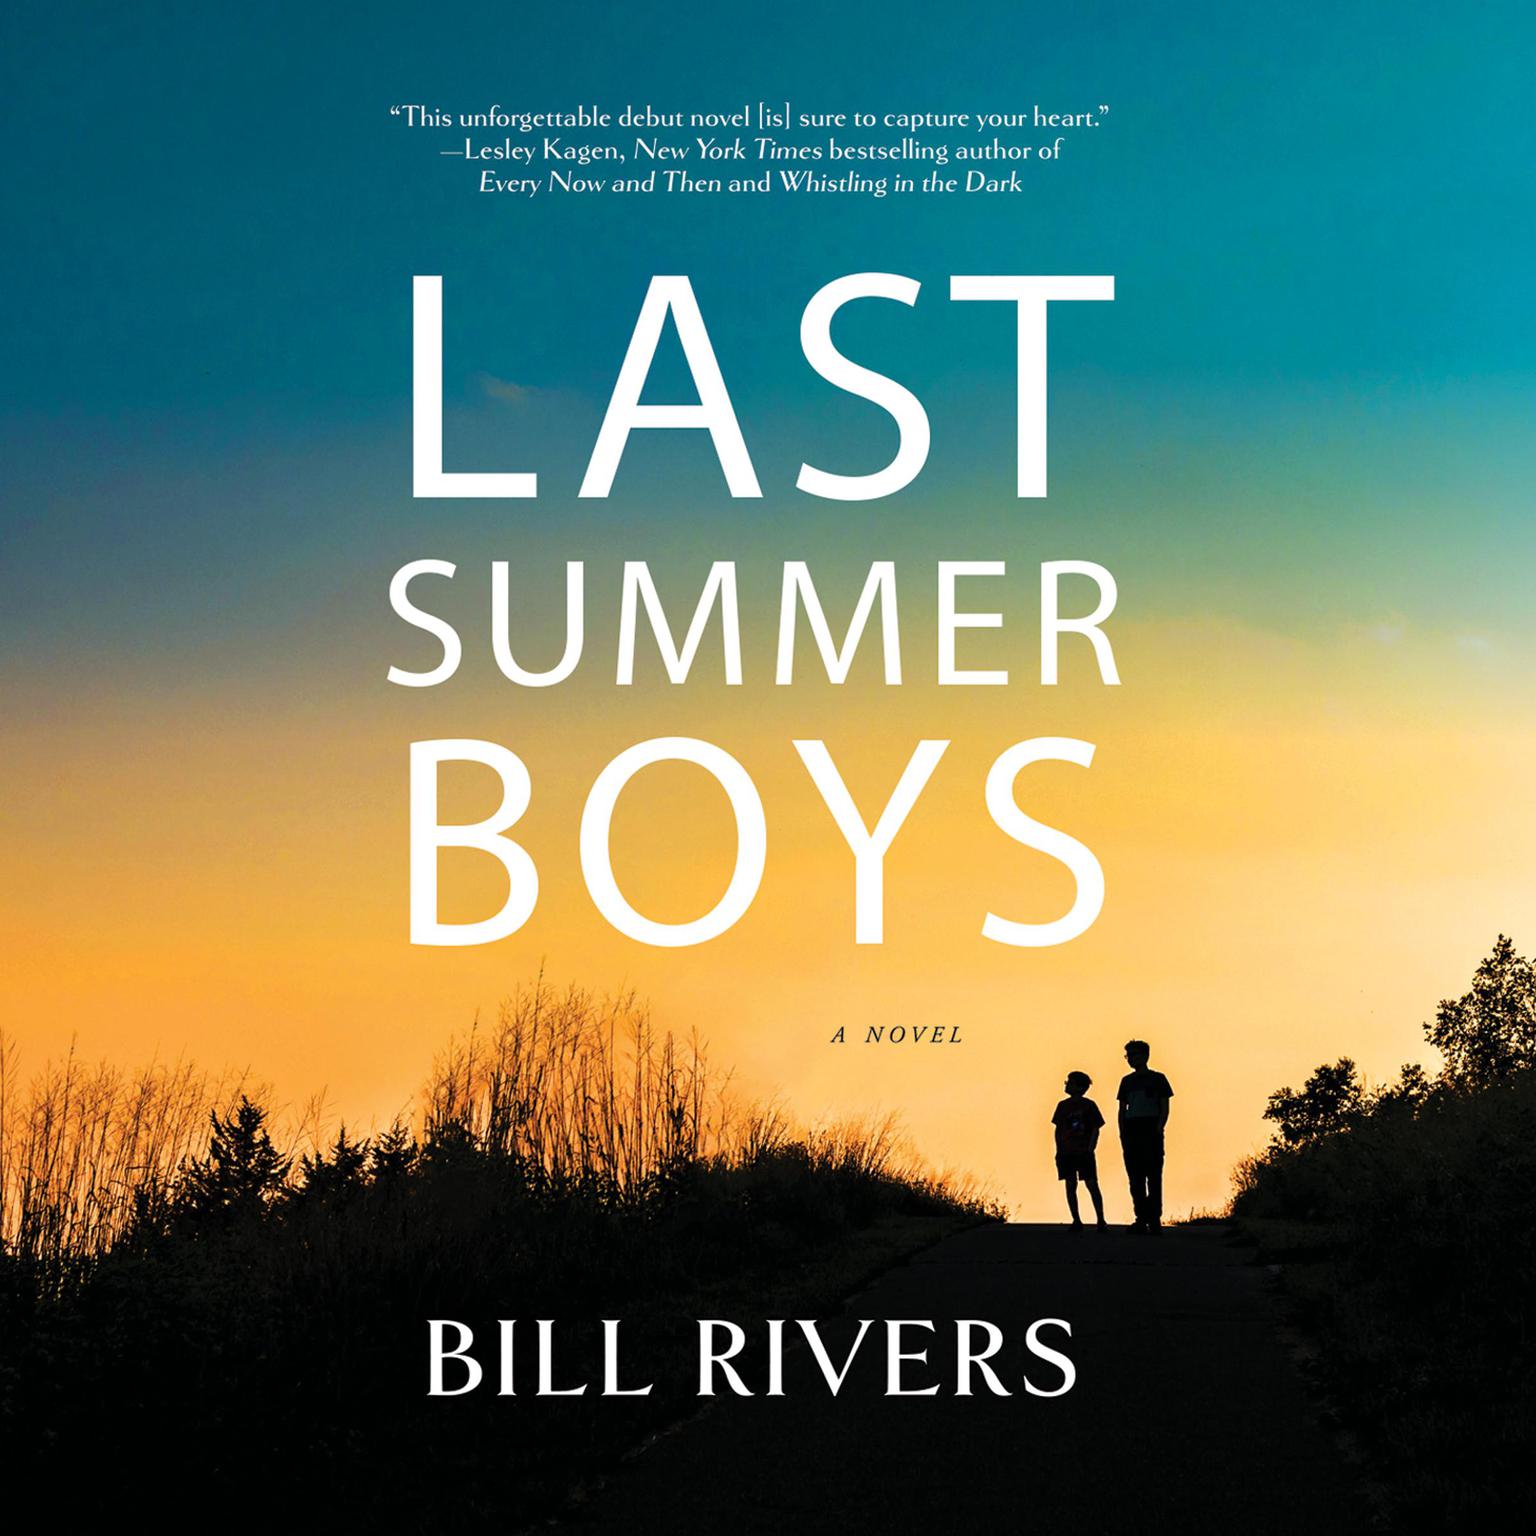 Last Summer Boys: A Novel Audiobook, by Bill Rivers